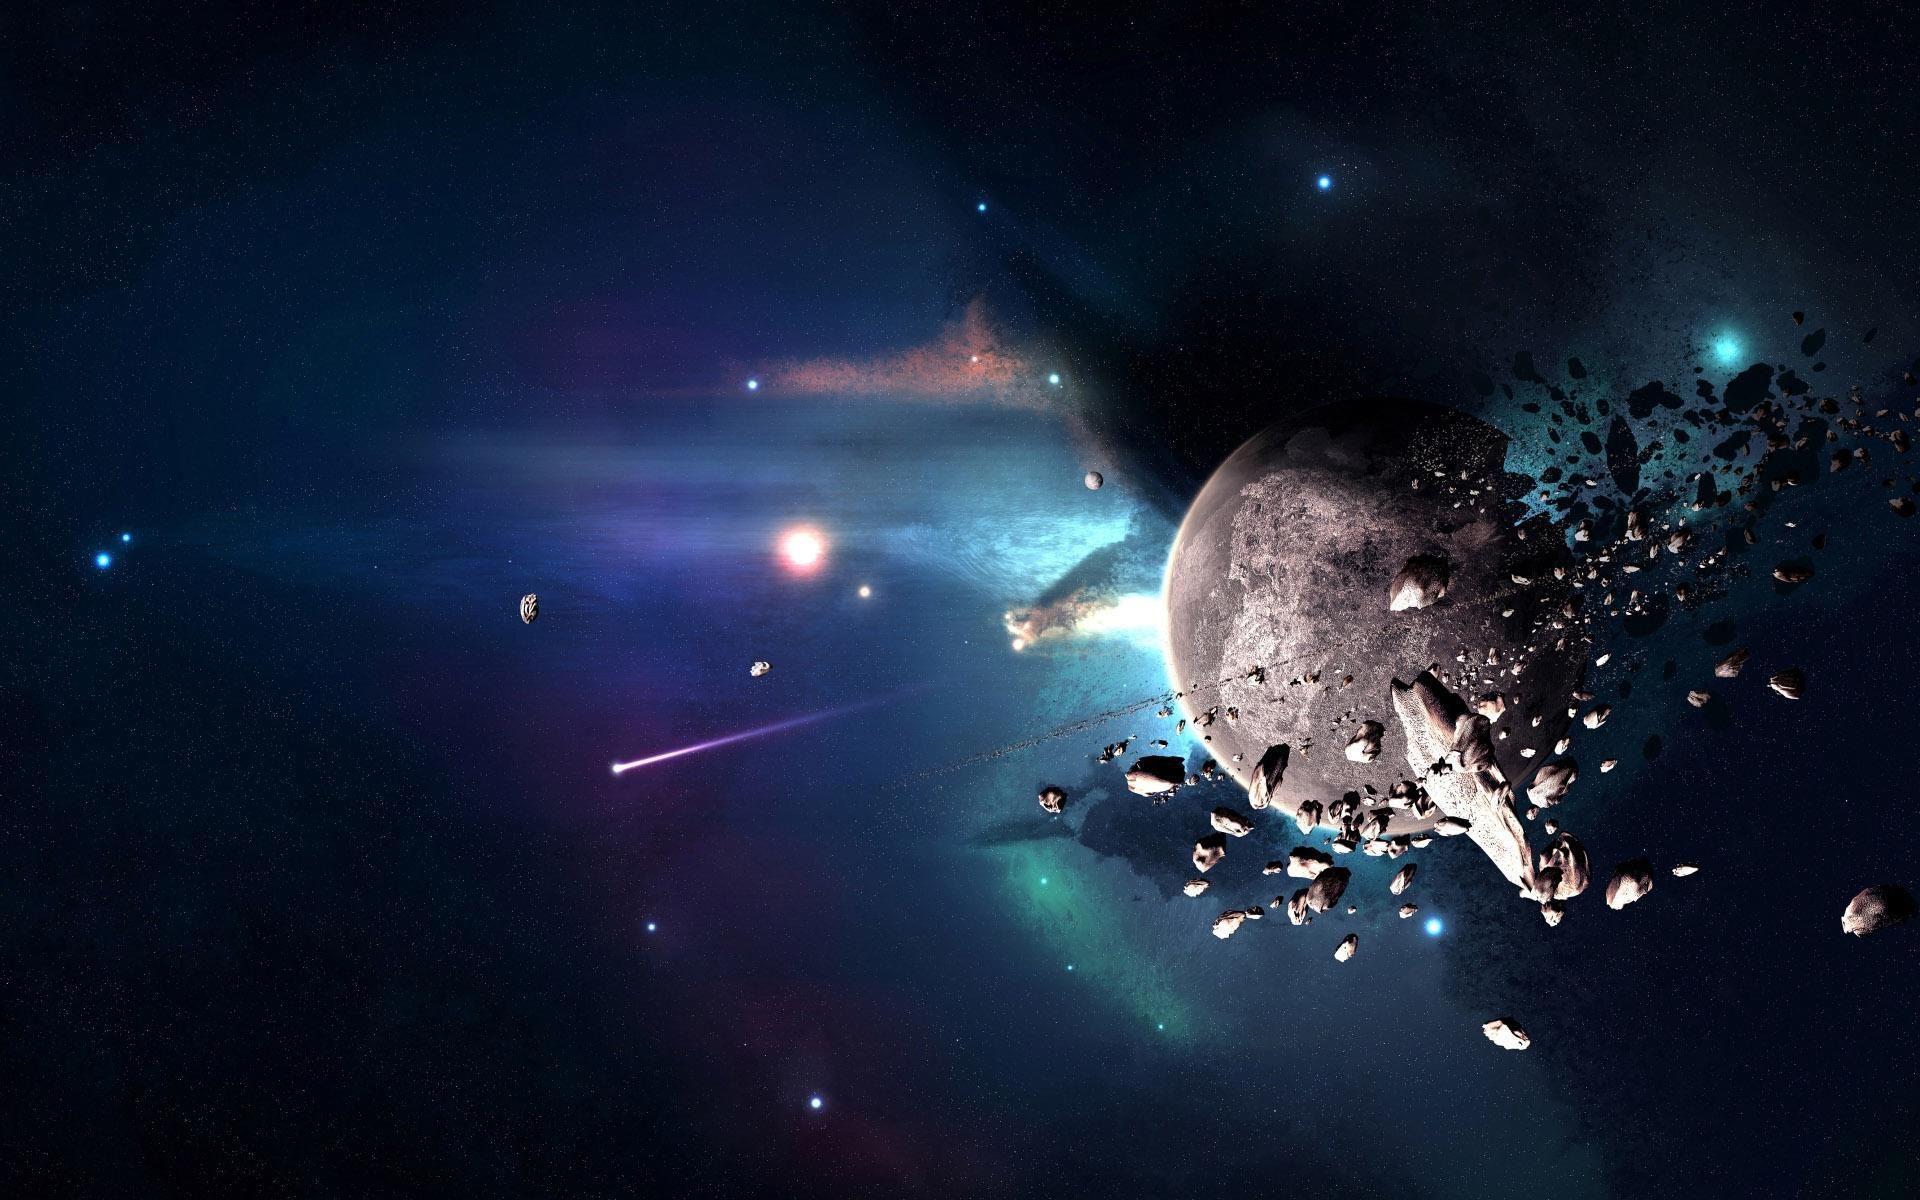 Meteorites circling the planet wallpaper